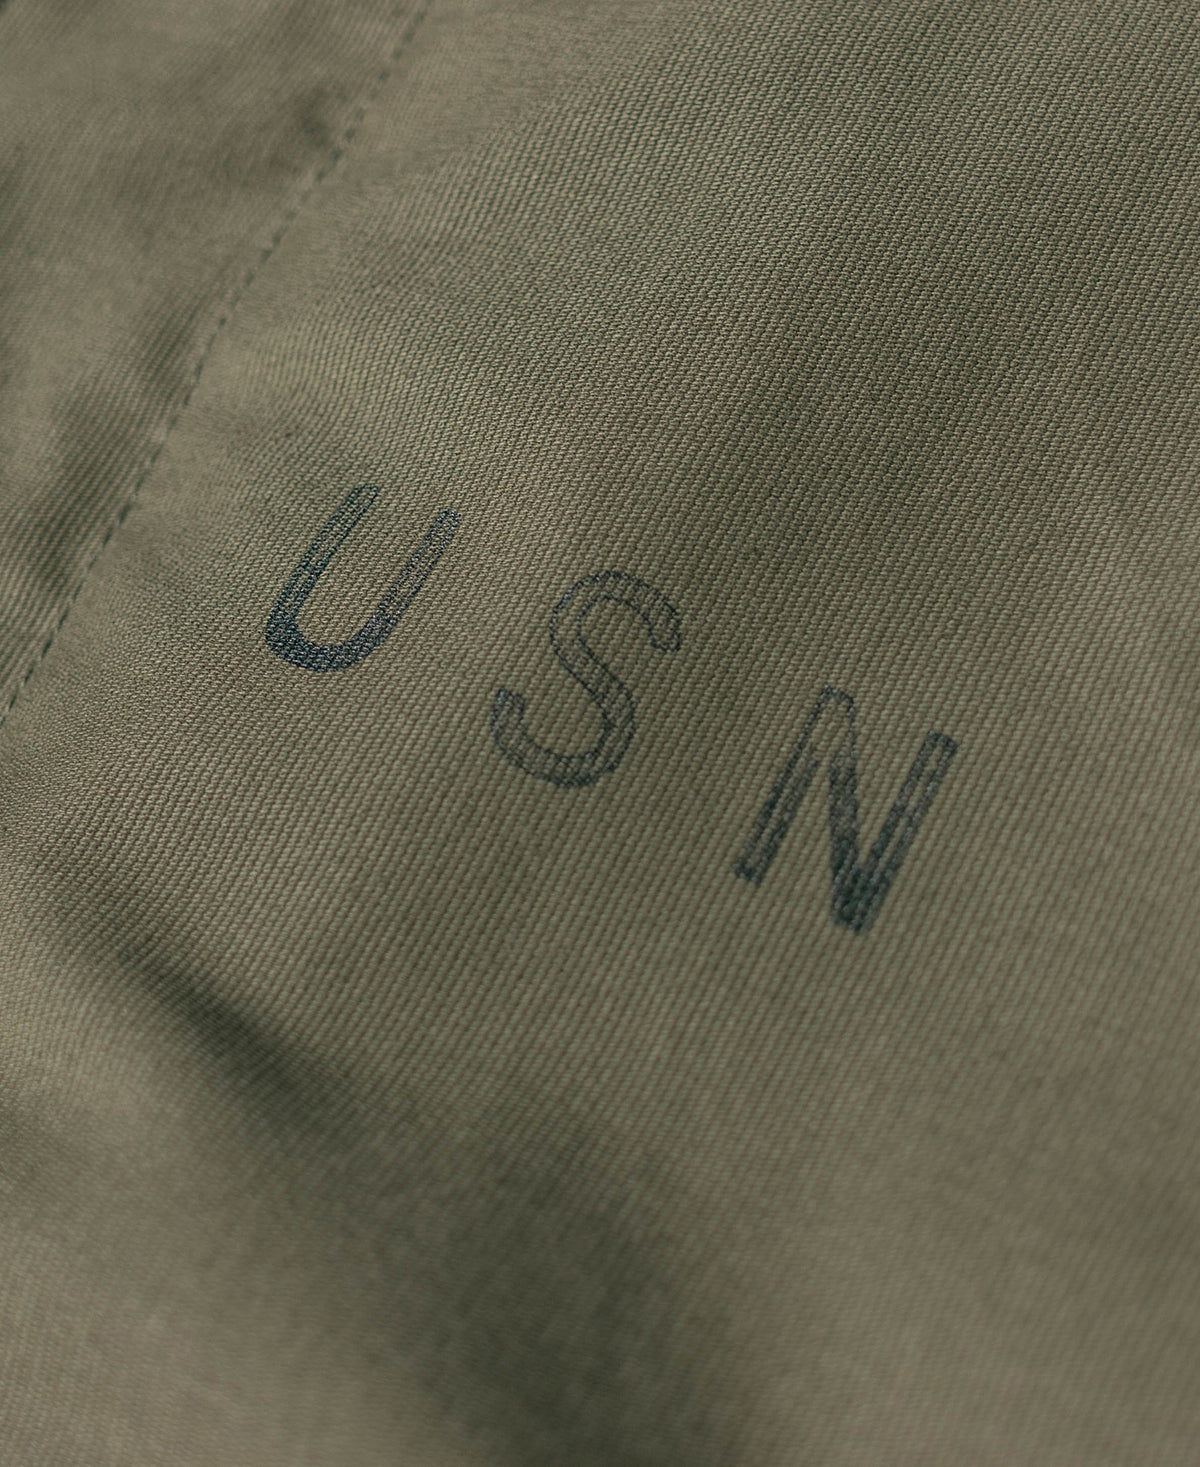 1940s USN 3rd Type N-1 Woolen Deck Jacket - Olive Stencil